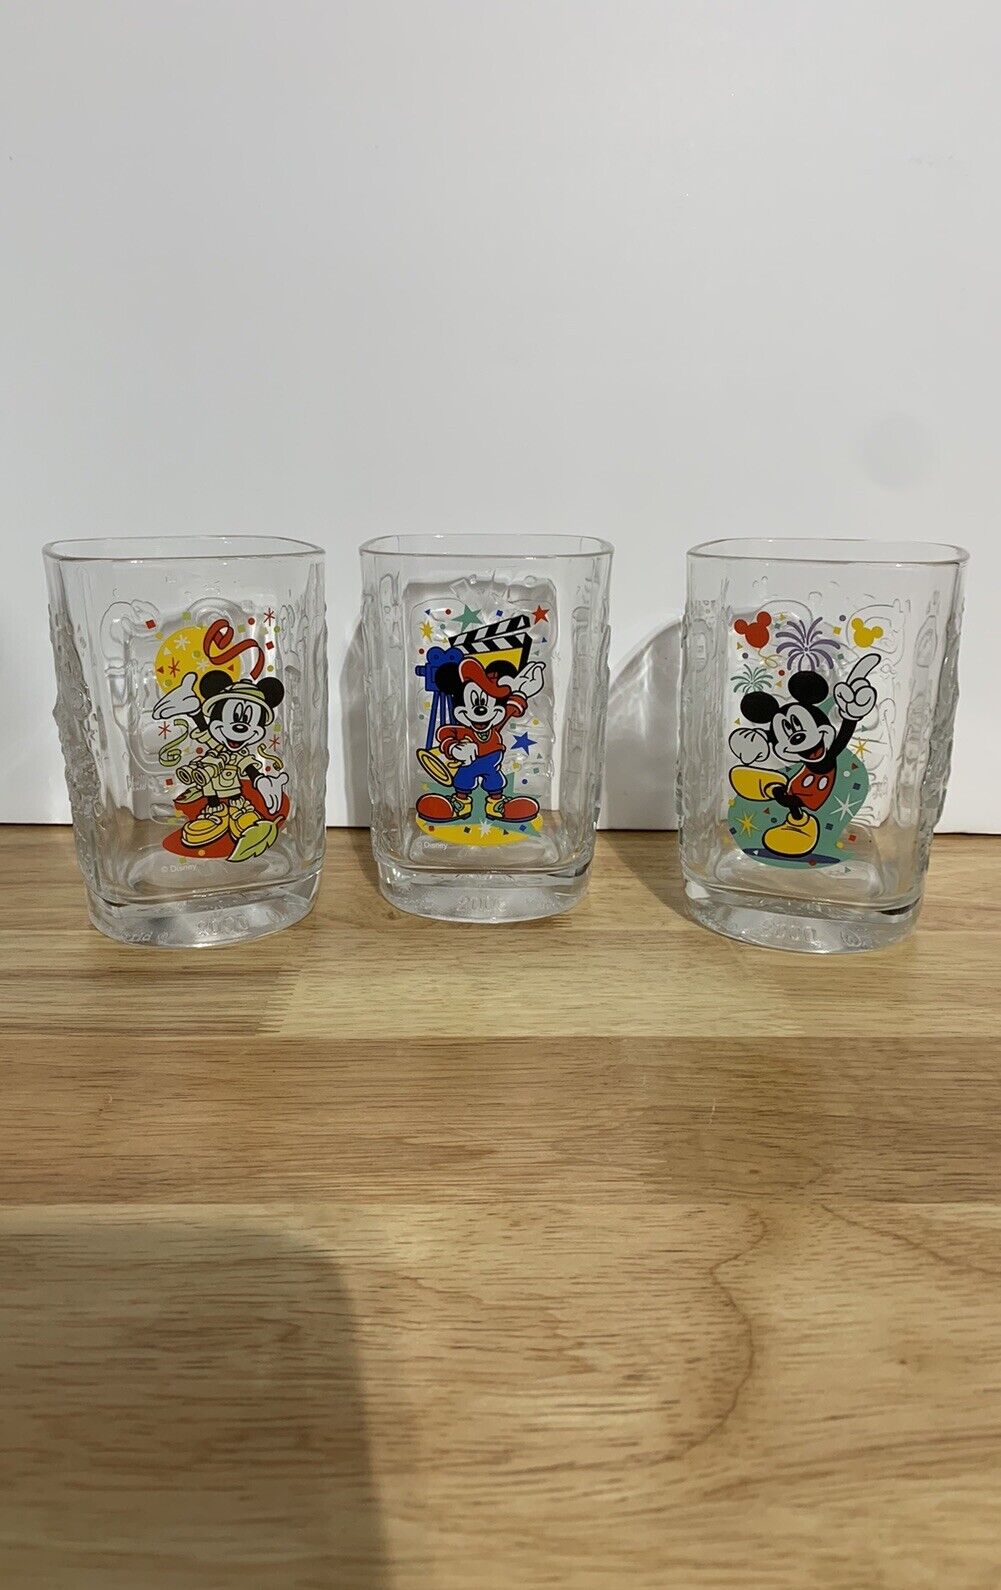 McDonalds Walt Disney World Year 2000 Celebration Glasses Set of 3 Mickey Mouse